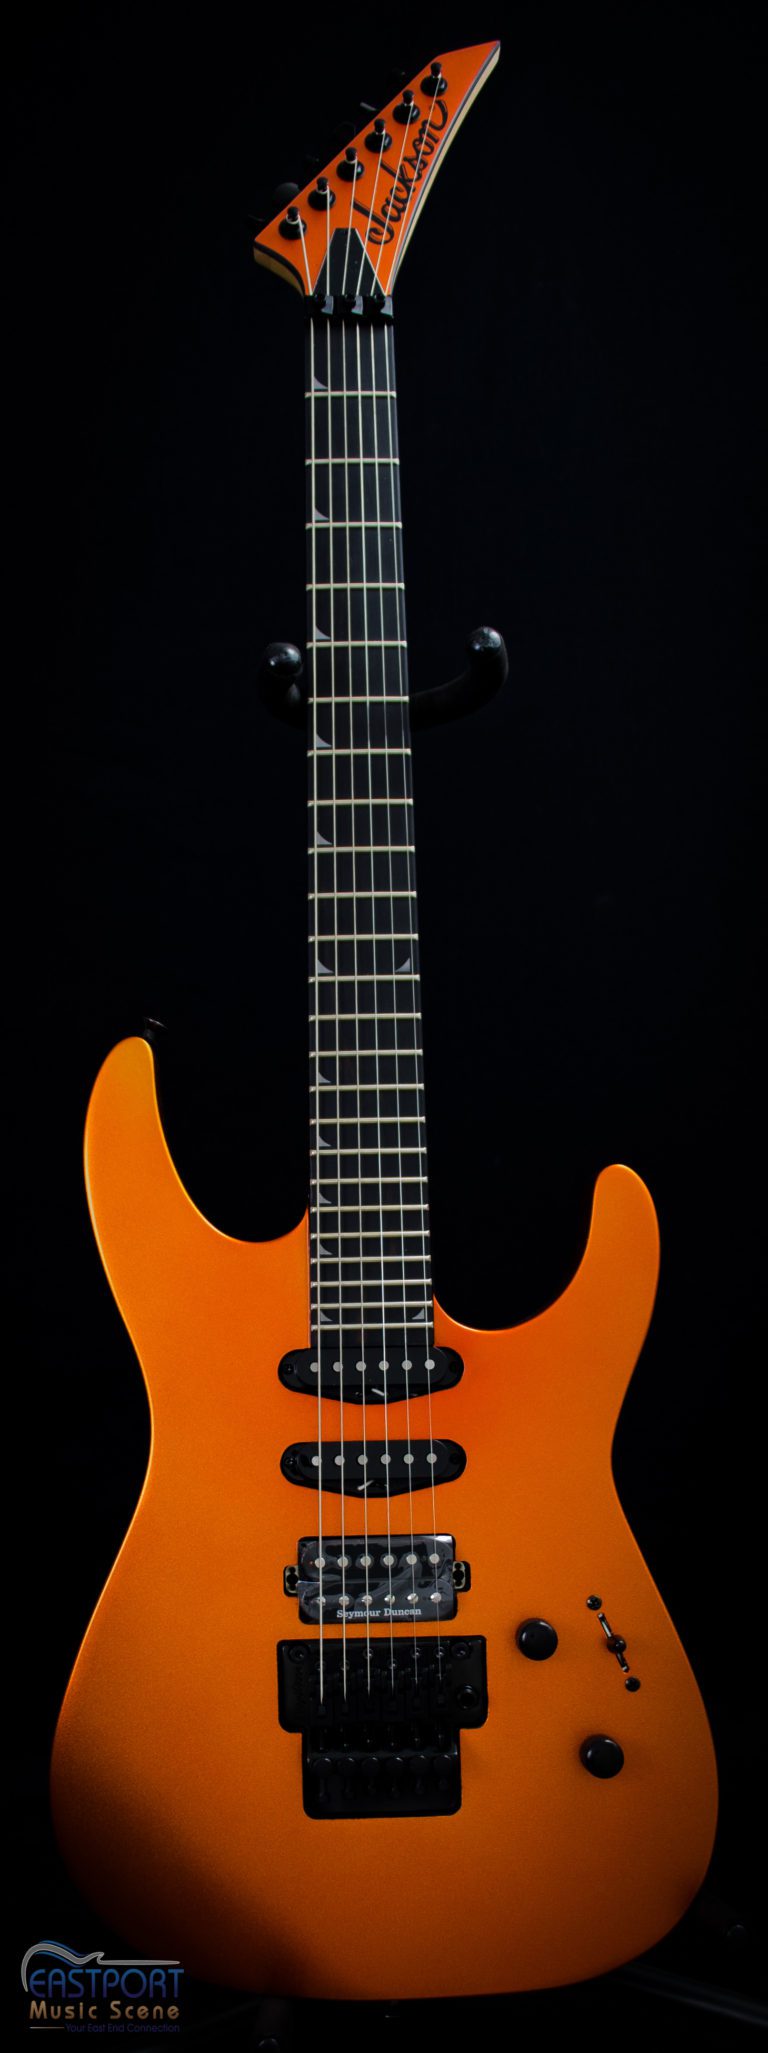 A close up of an orange electric guitar